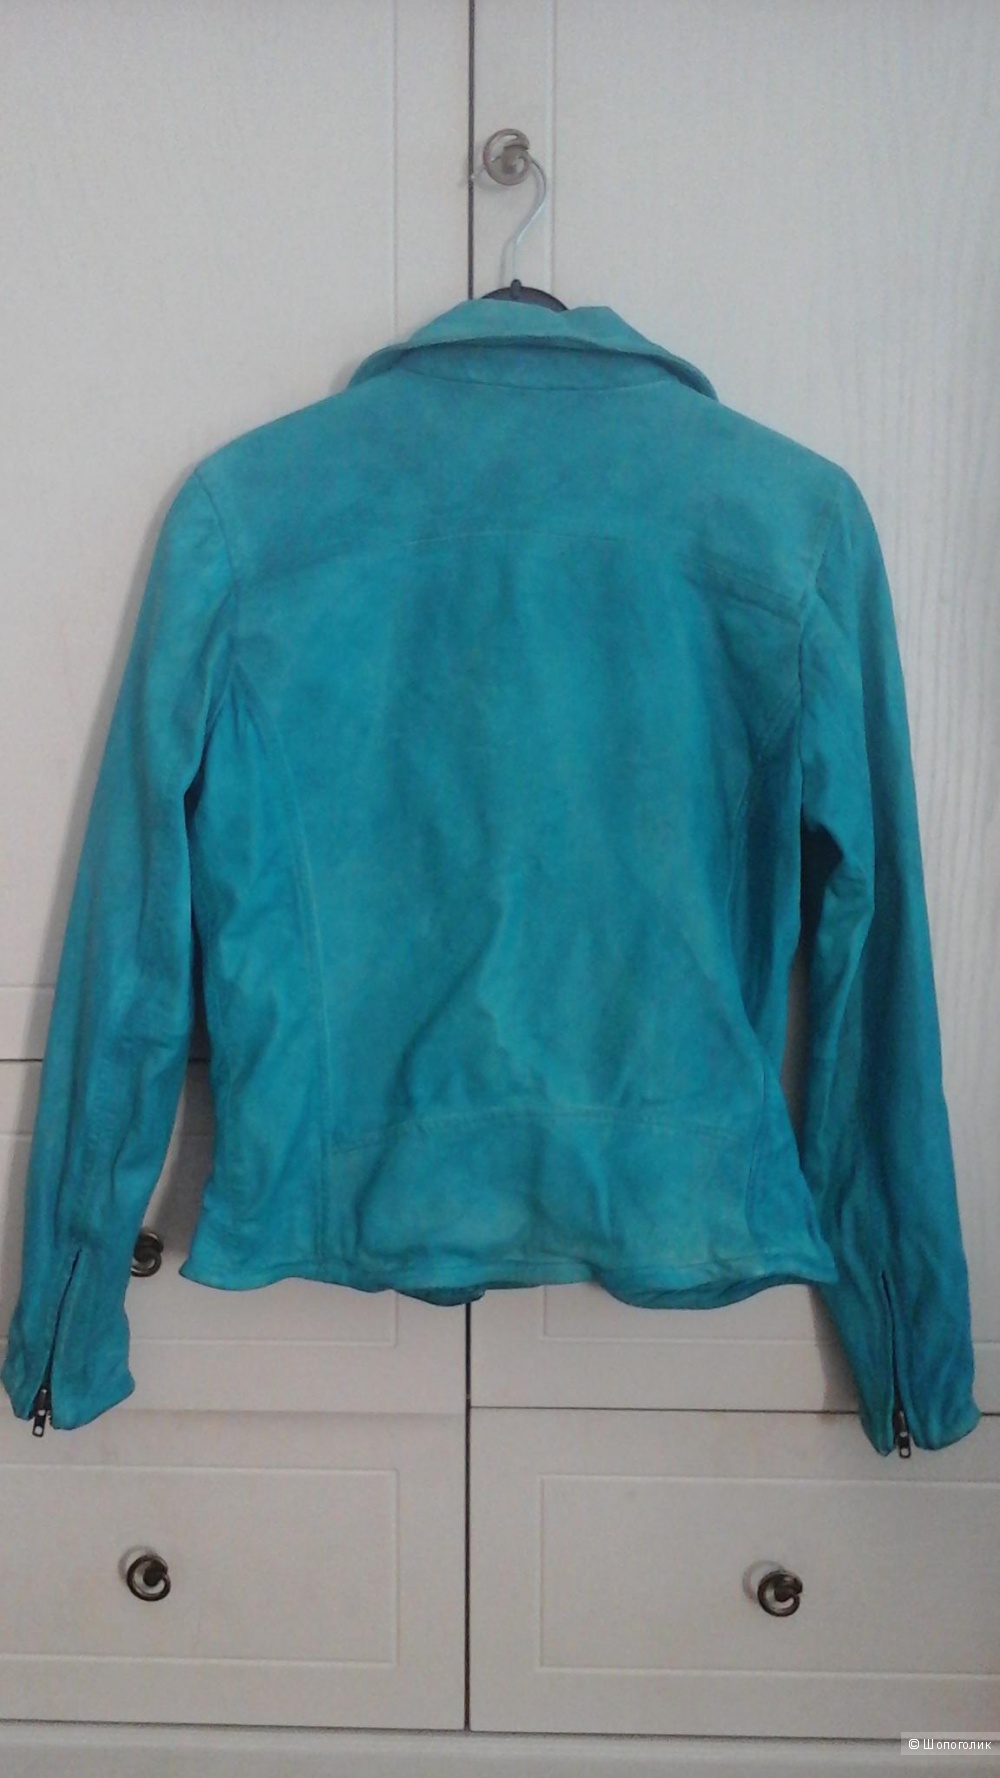 Кожаная куртка Bomboogie, размер 44-46